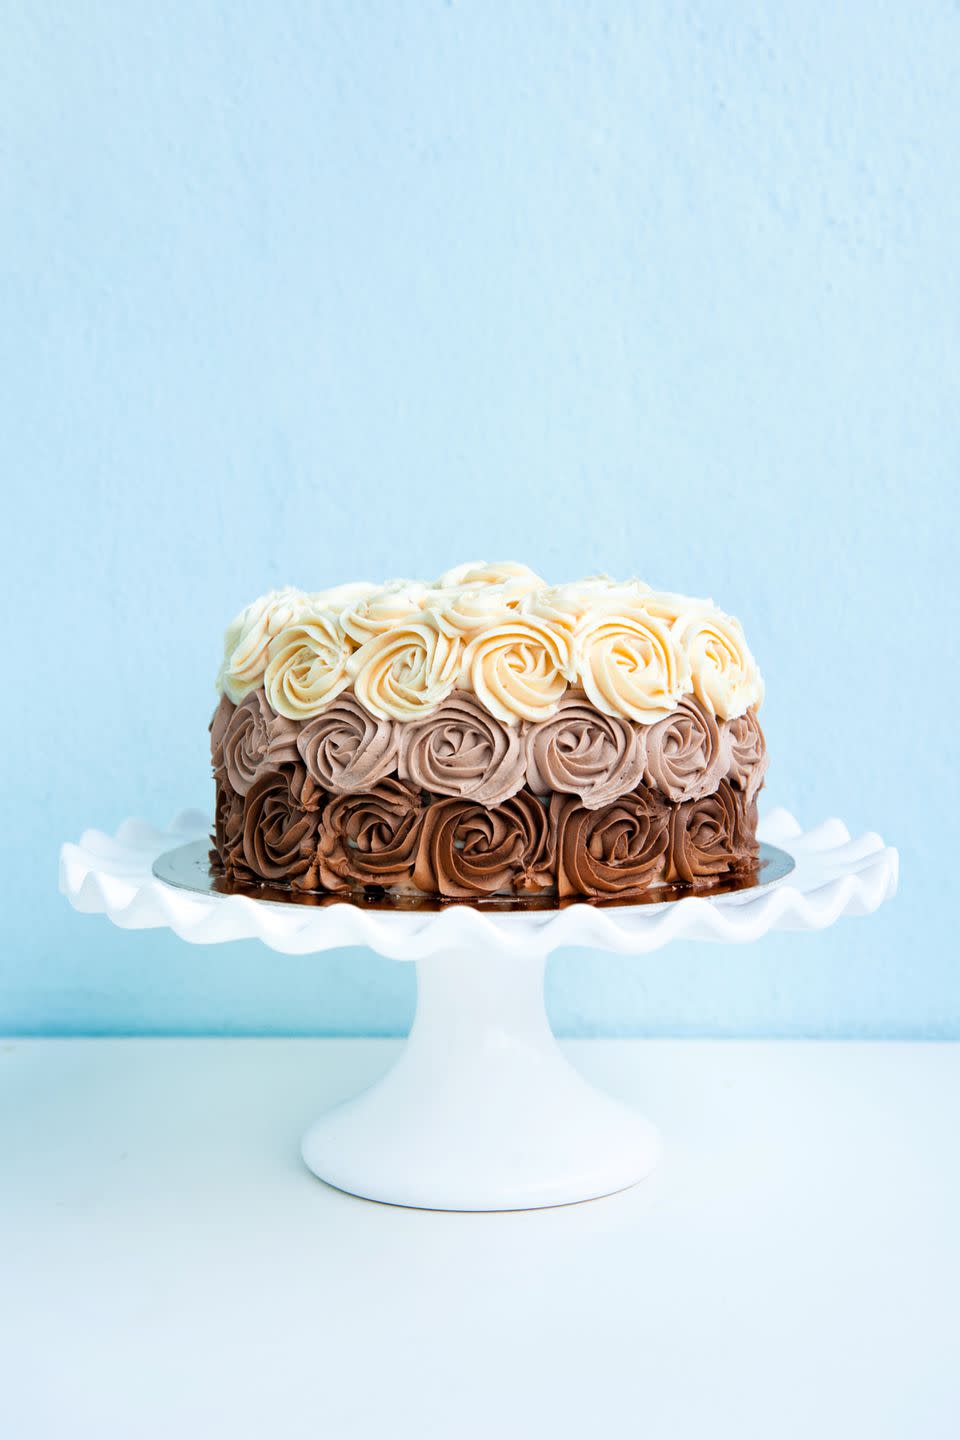 Make a circular cake feed more party guests.